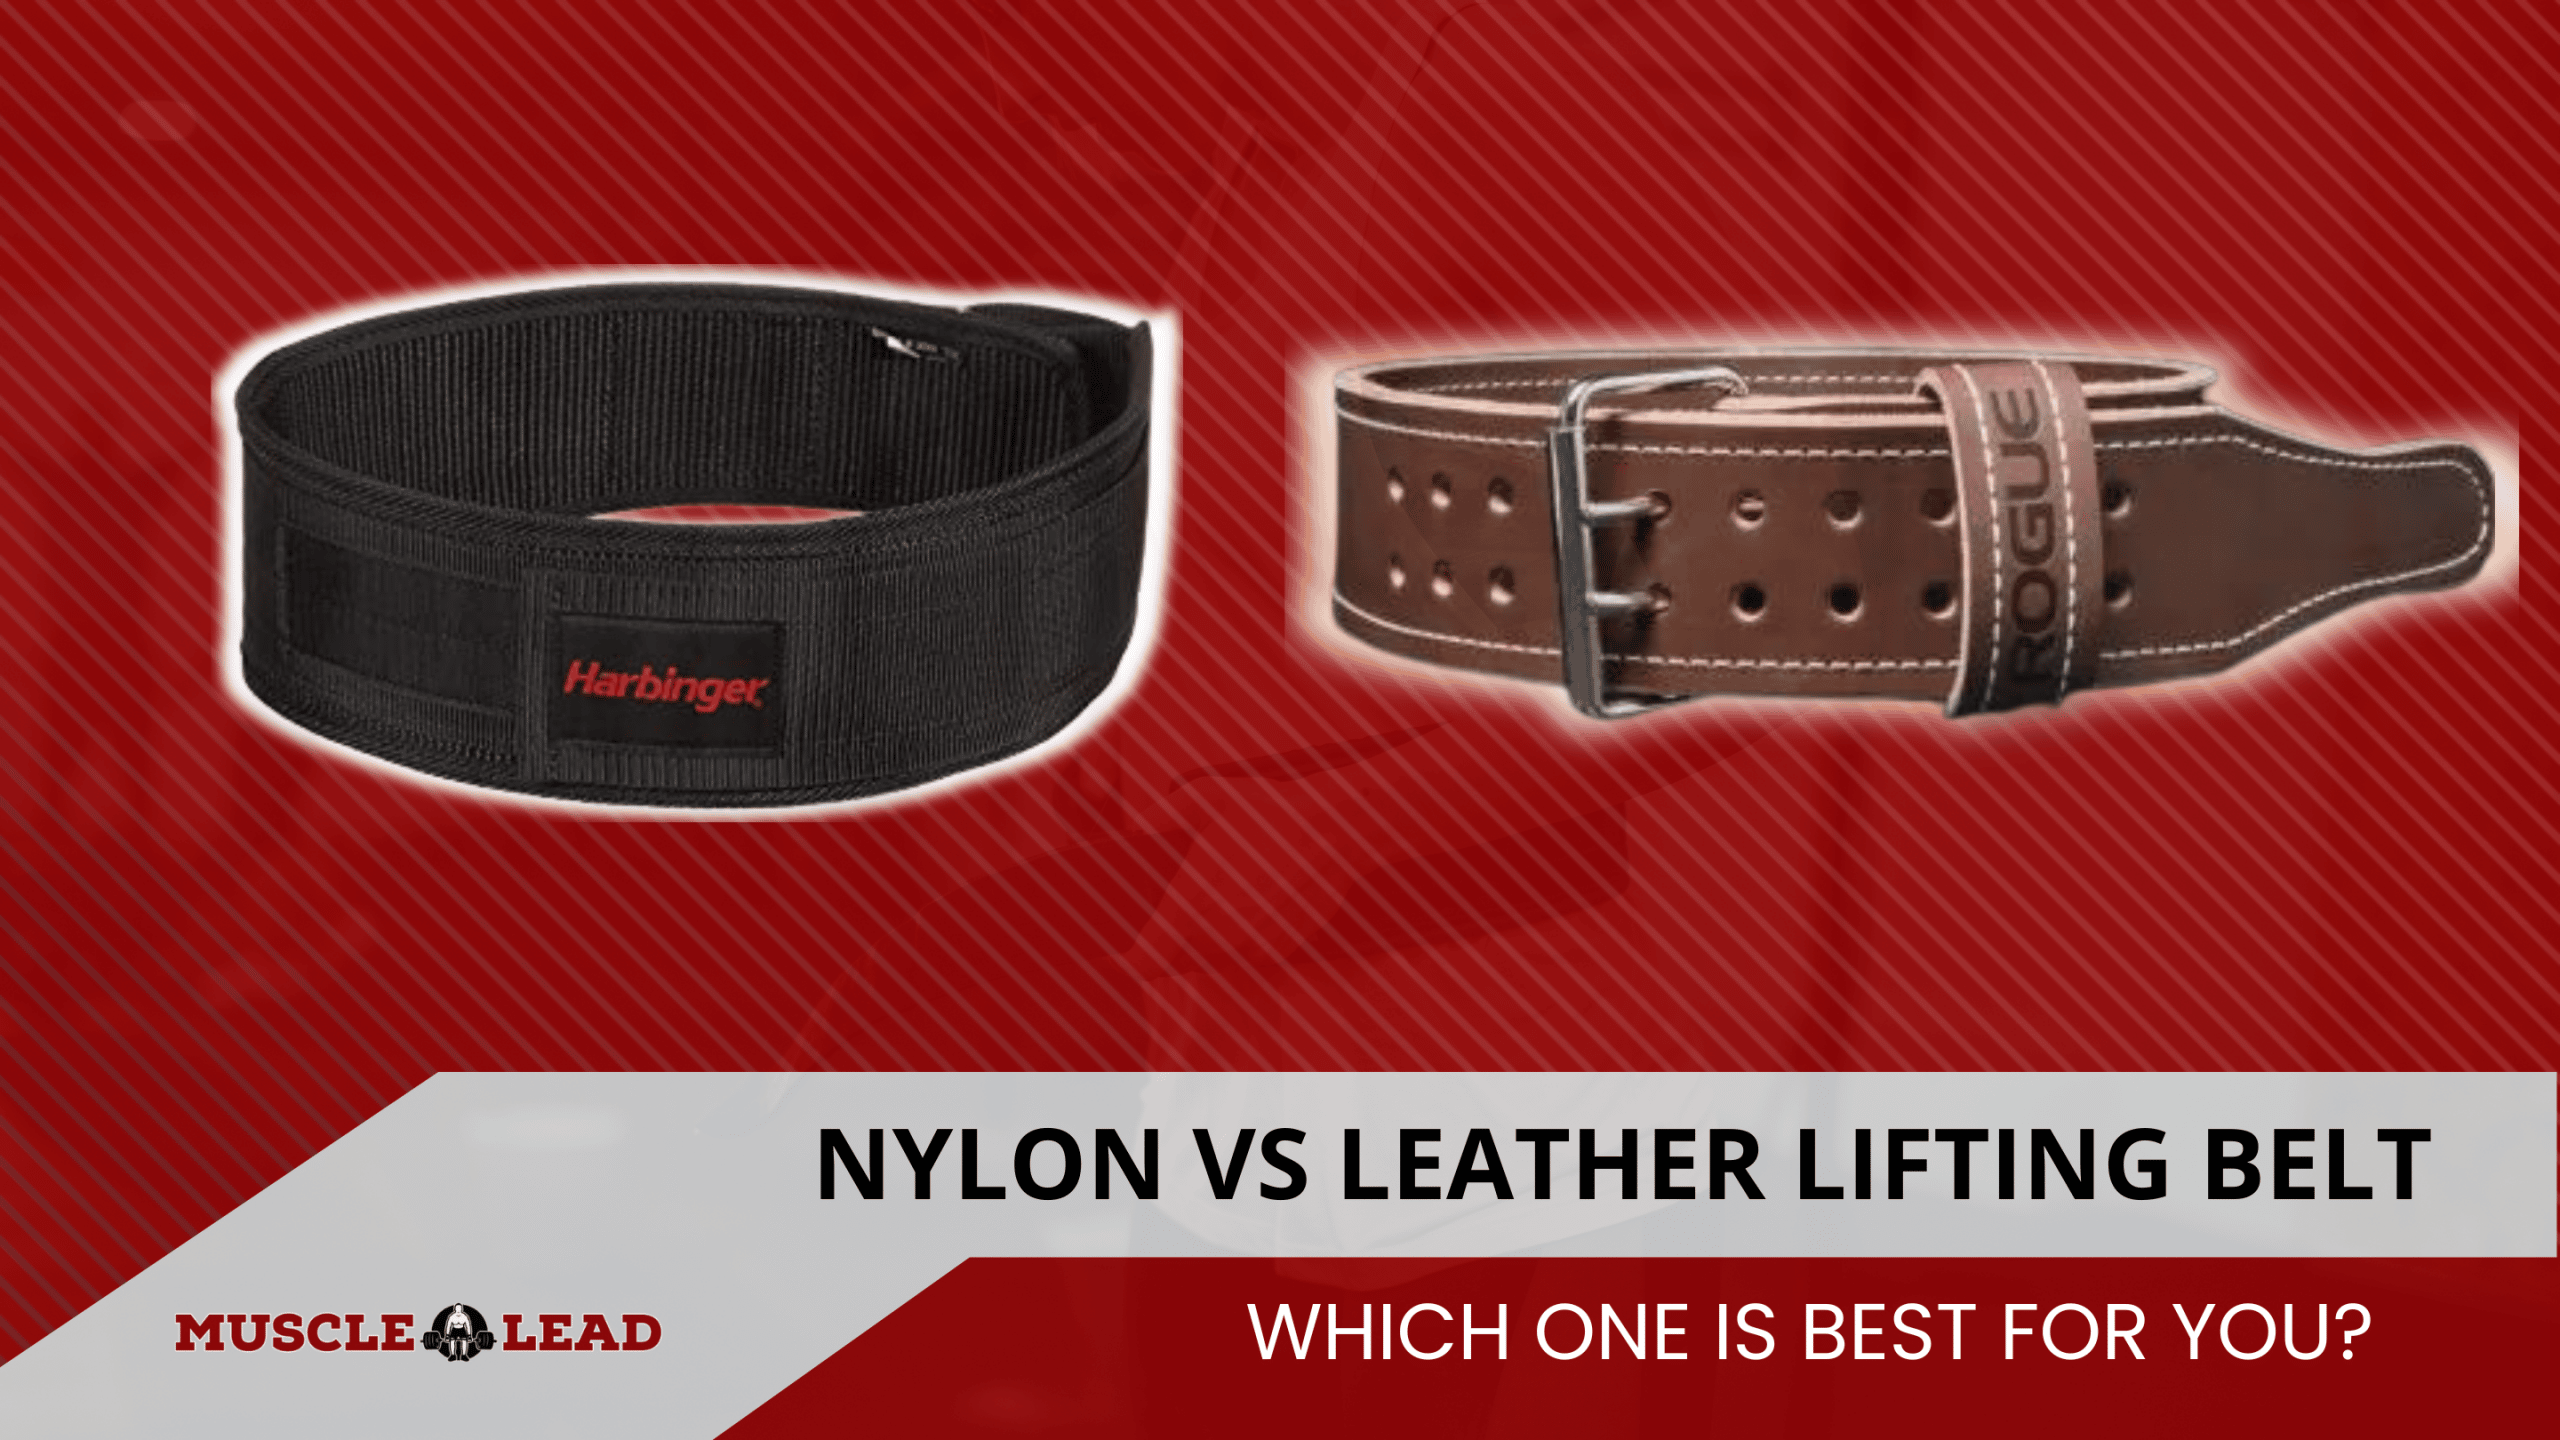 Figure of Nylon vs Leather lifting belt